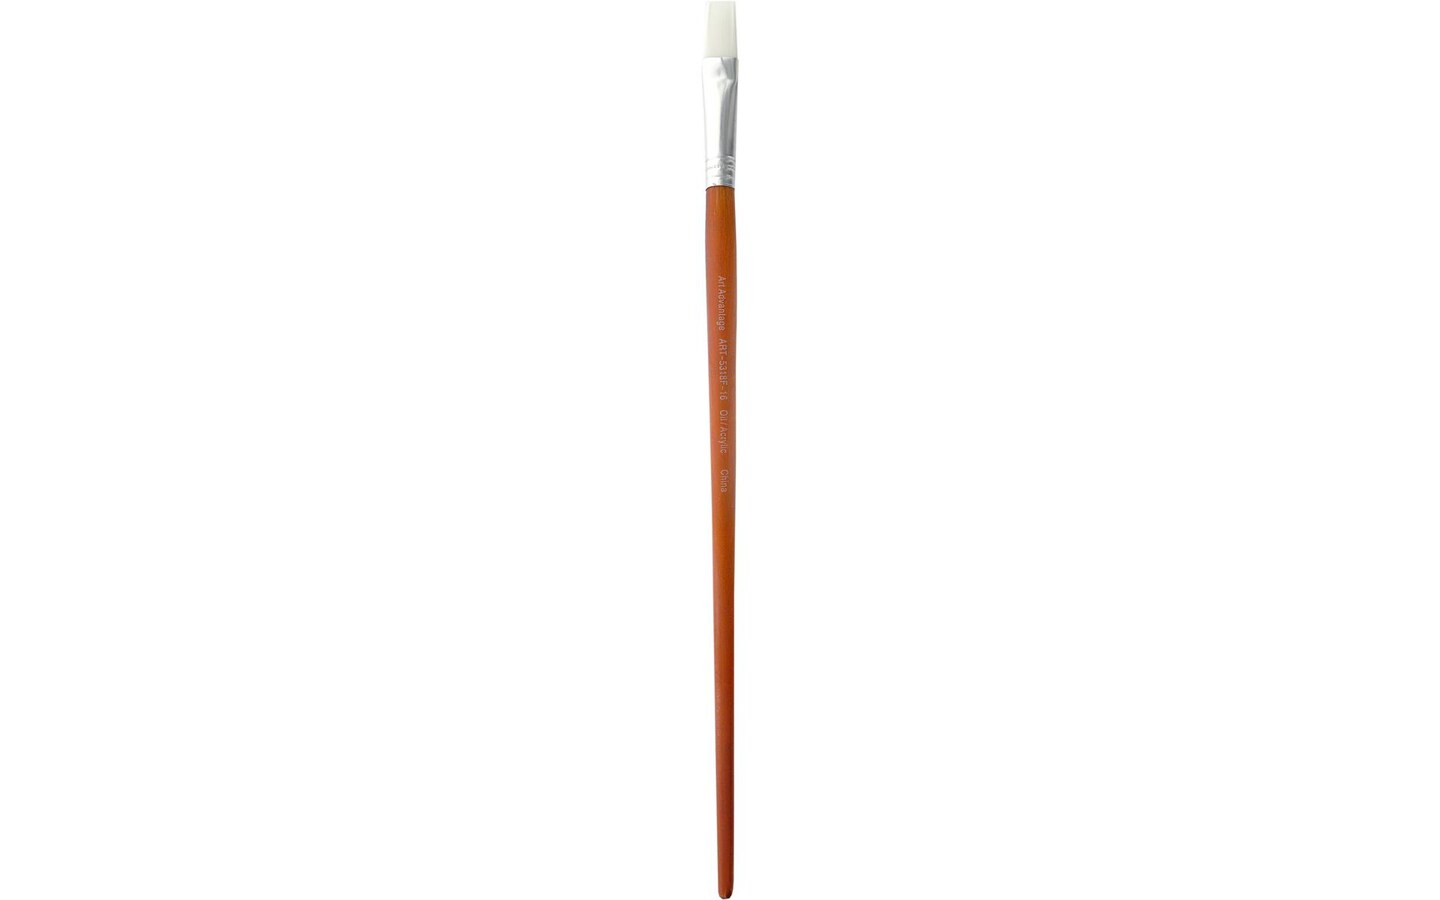 Art Advantage White Nylon Bristle Long Handle Flat #16 Paint Brush with Wood Handle - paint brushes for Acrylic Paint , Oil or Watercolor Paint - Face Paint application, Nail Art